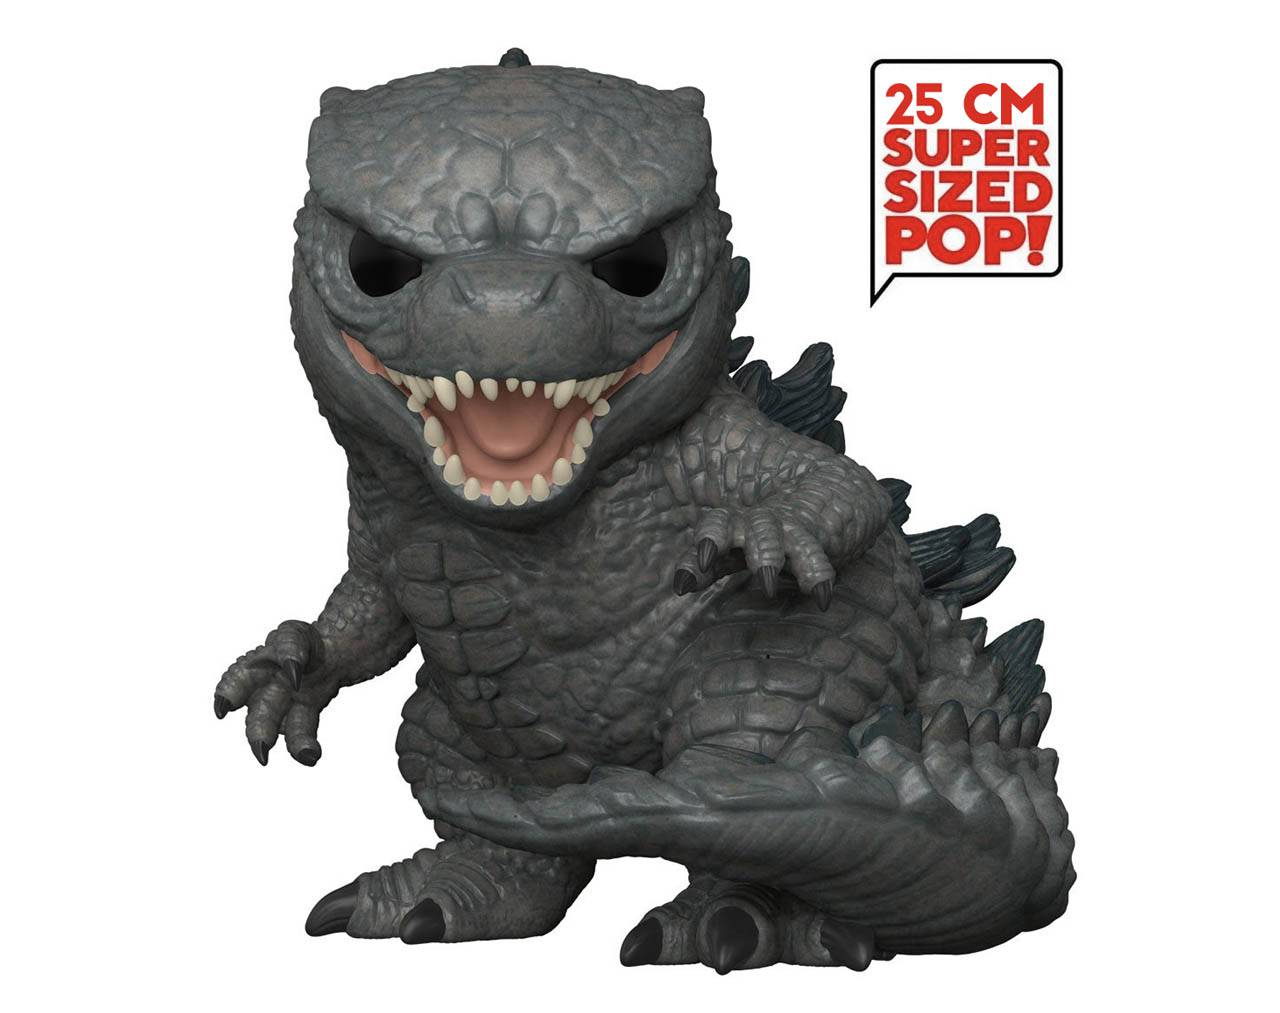 Godzilla (25 cm) Super Sized Pop! Vinyl